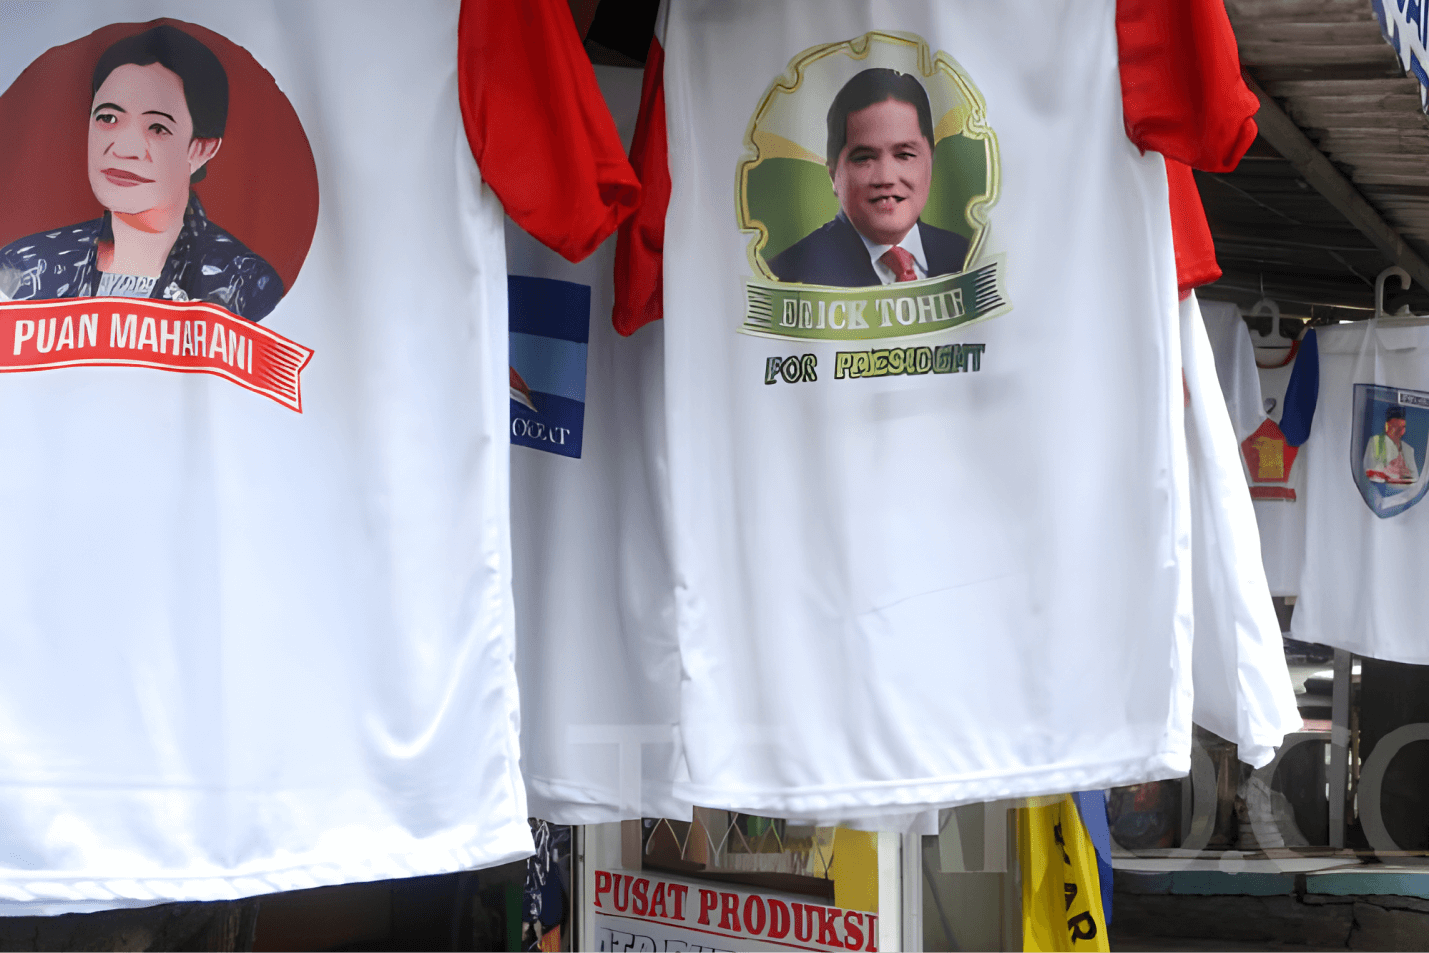 Koleksi Merchandise Pemilu Di Jalan Raya.